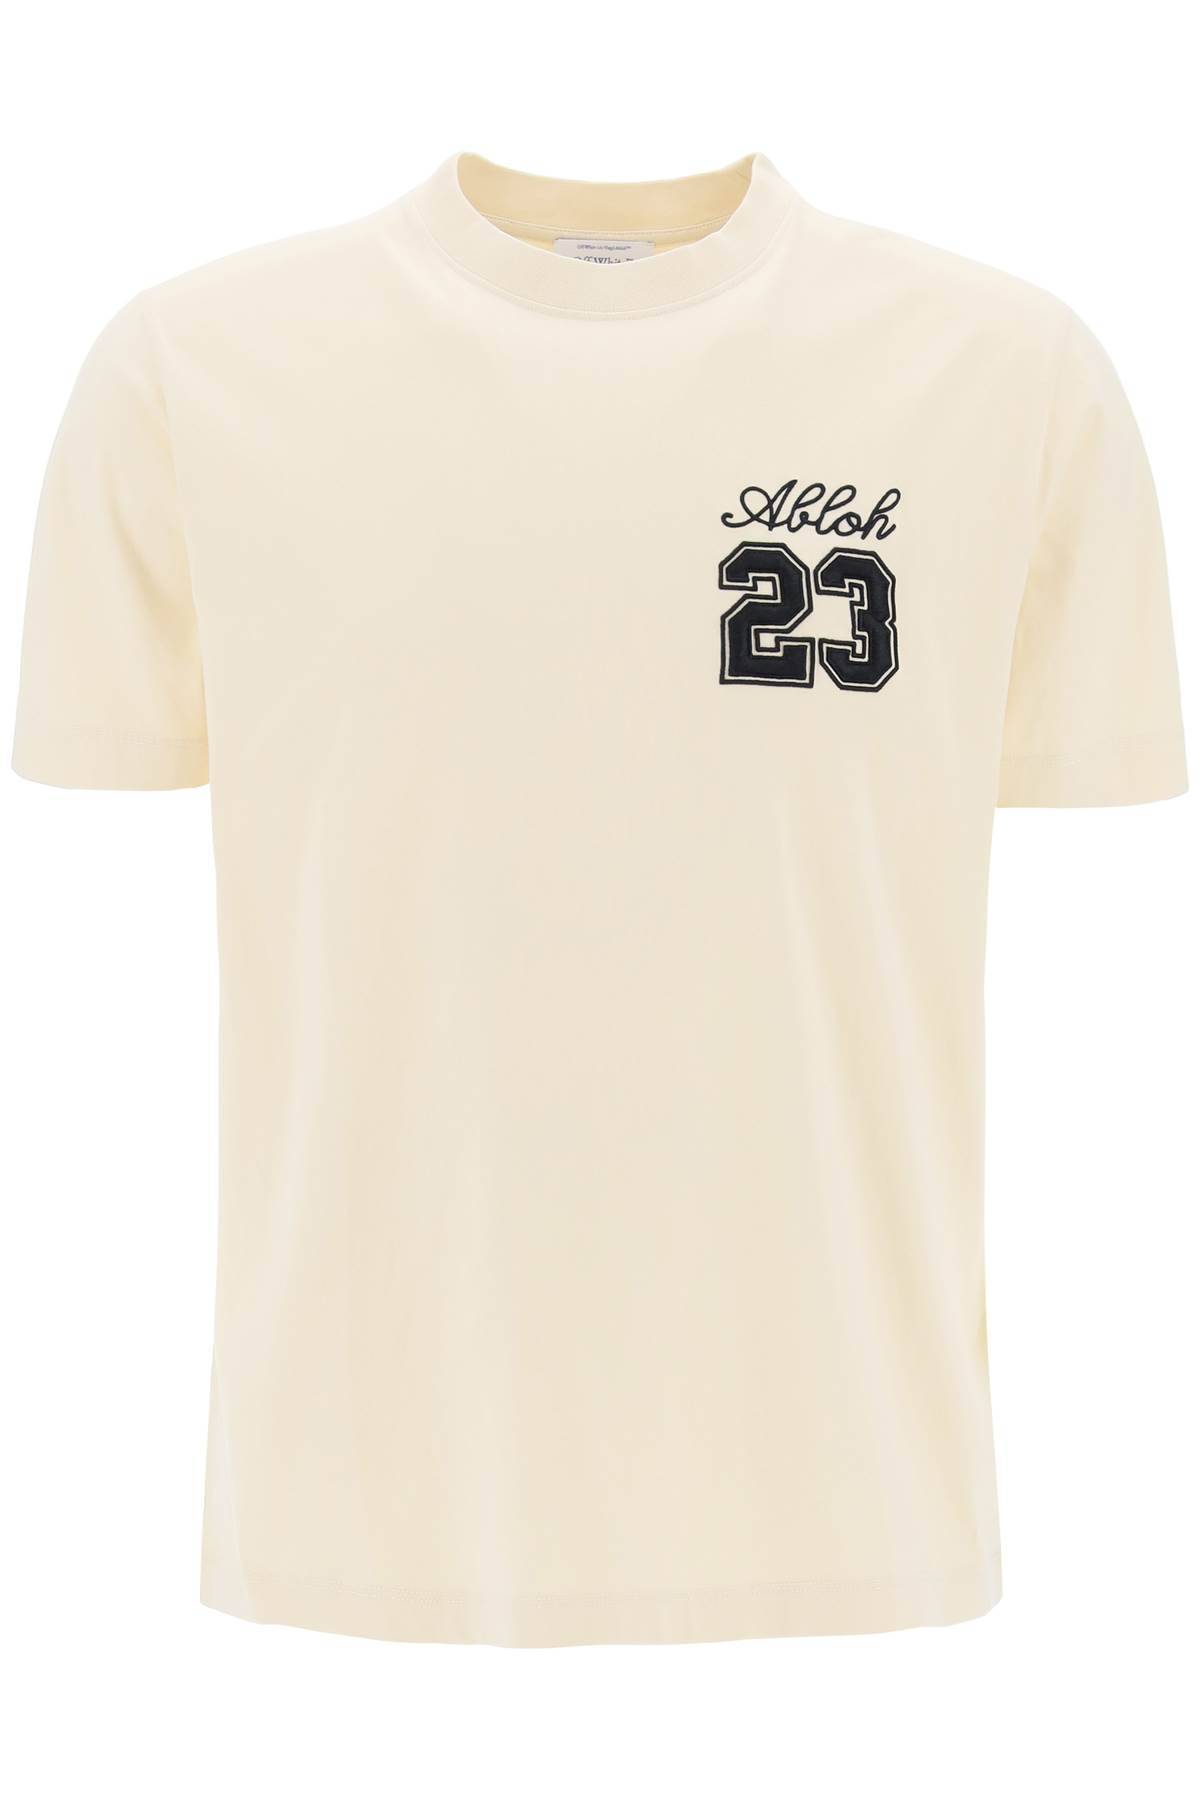 OFF-WHITE OFF-WHITE crew-neck t-shirt with 23 logo